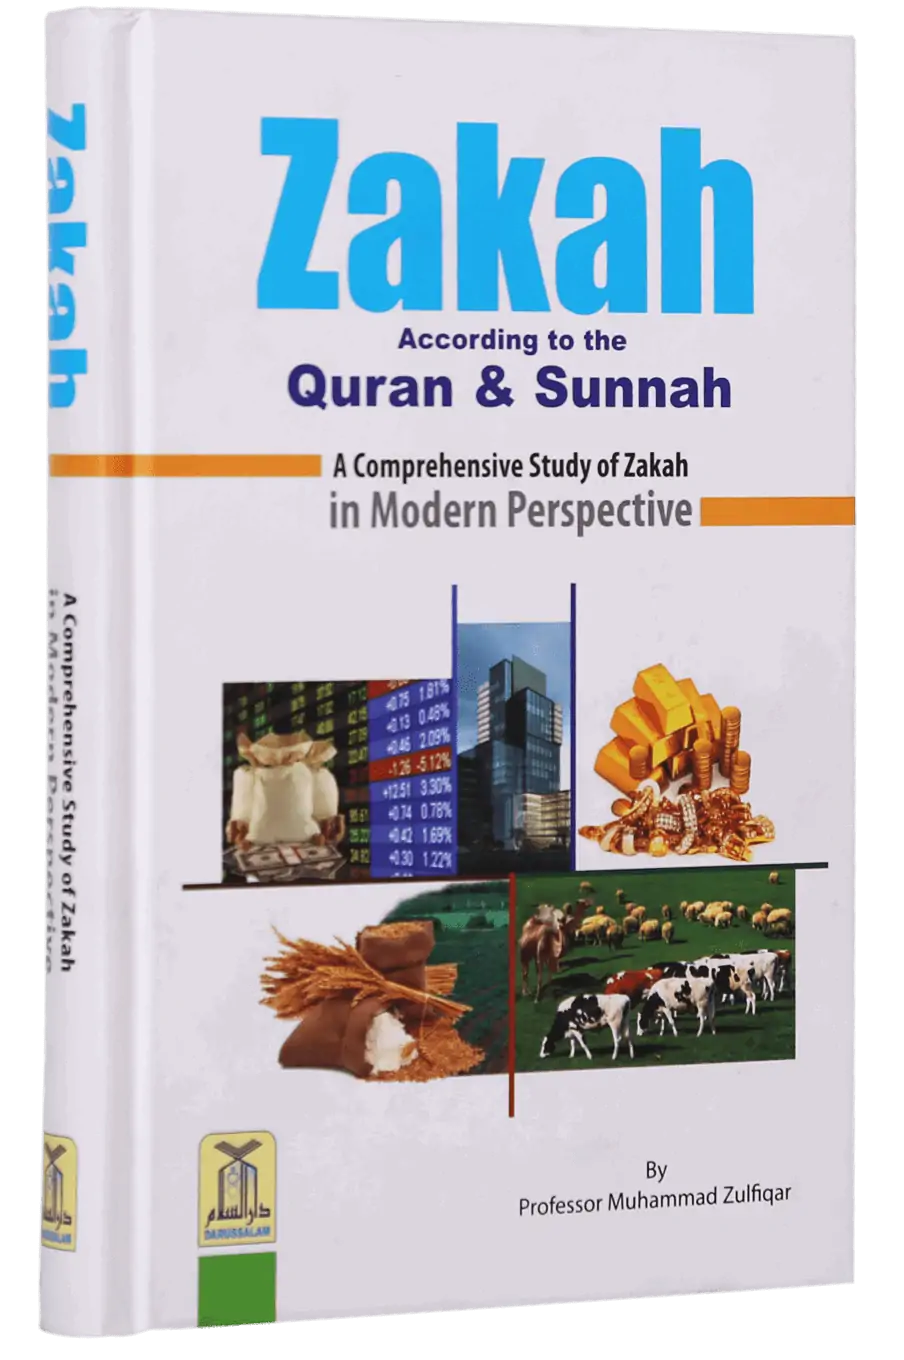 Zakah according to the Quran and Sunnah 2